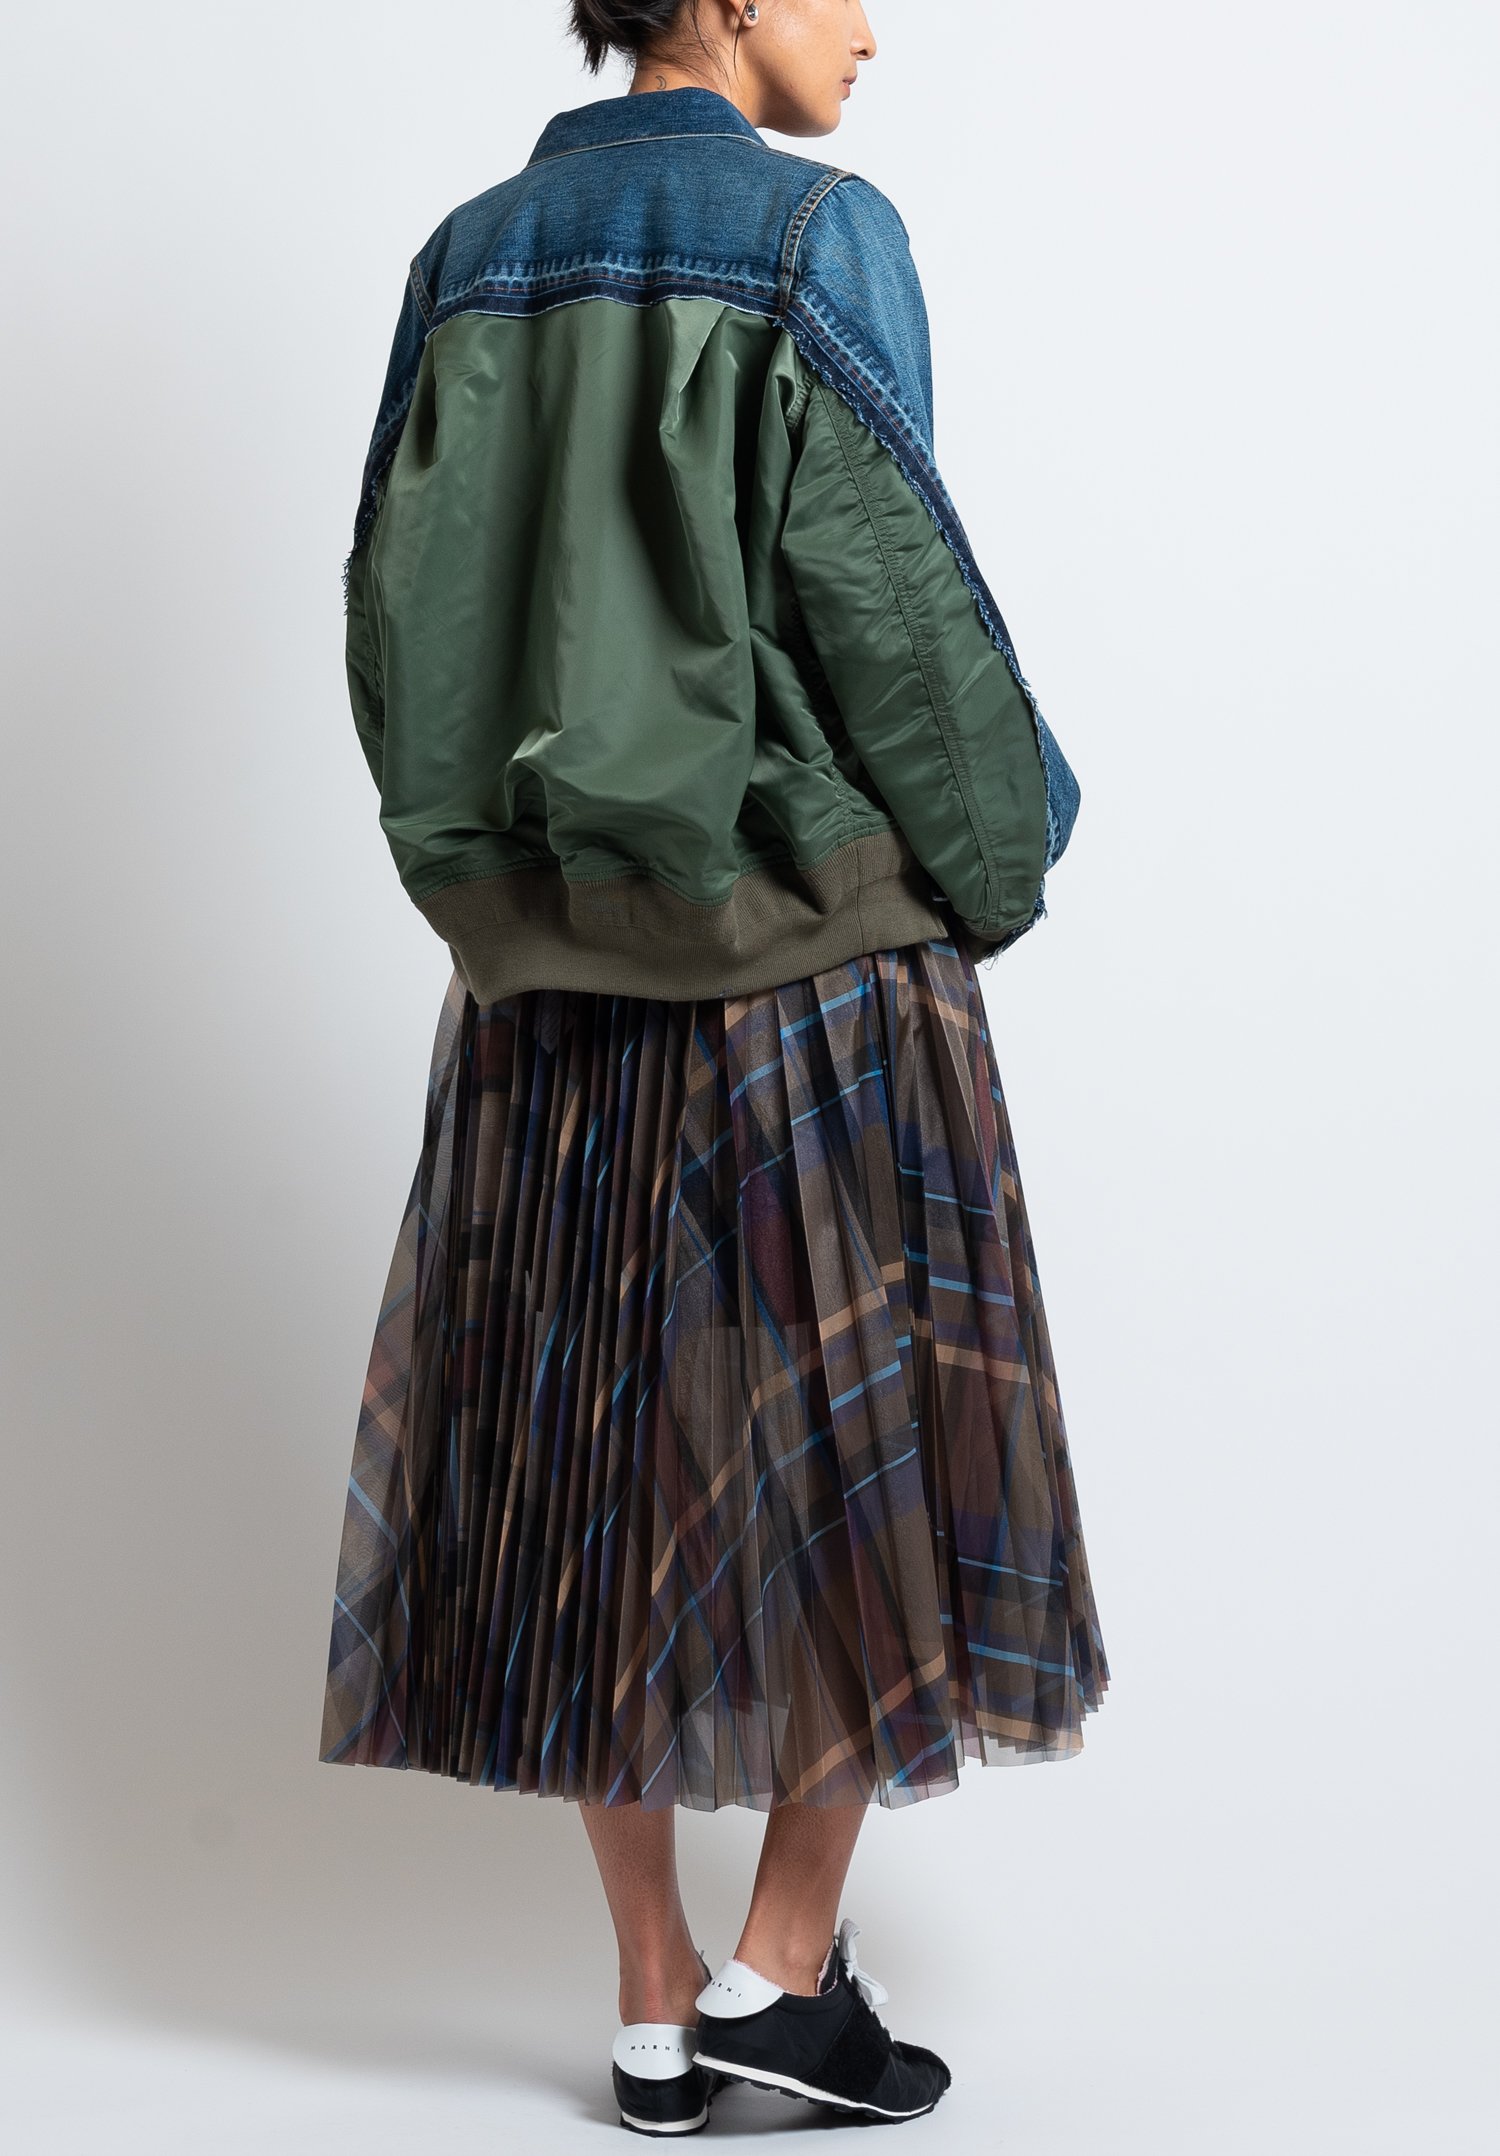 Sacai Denim/Nylon Multi-Fabric Jacket in Blue/Khaki | Santa Fe Dry